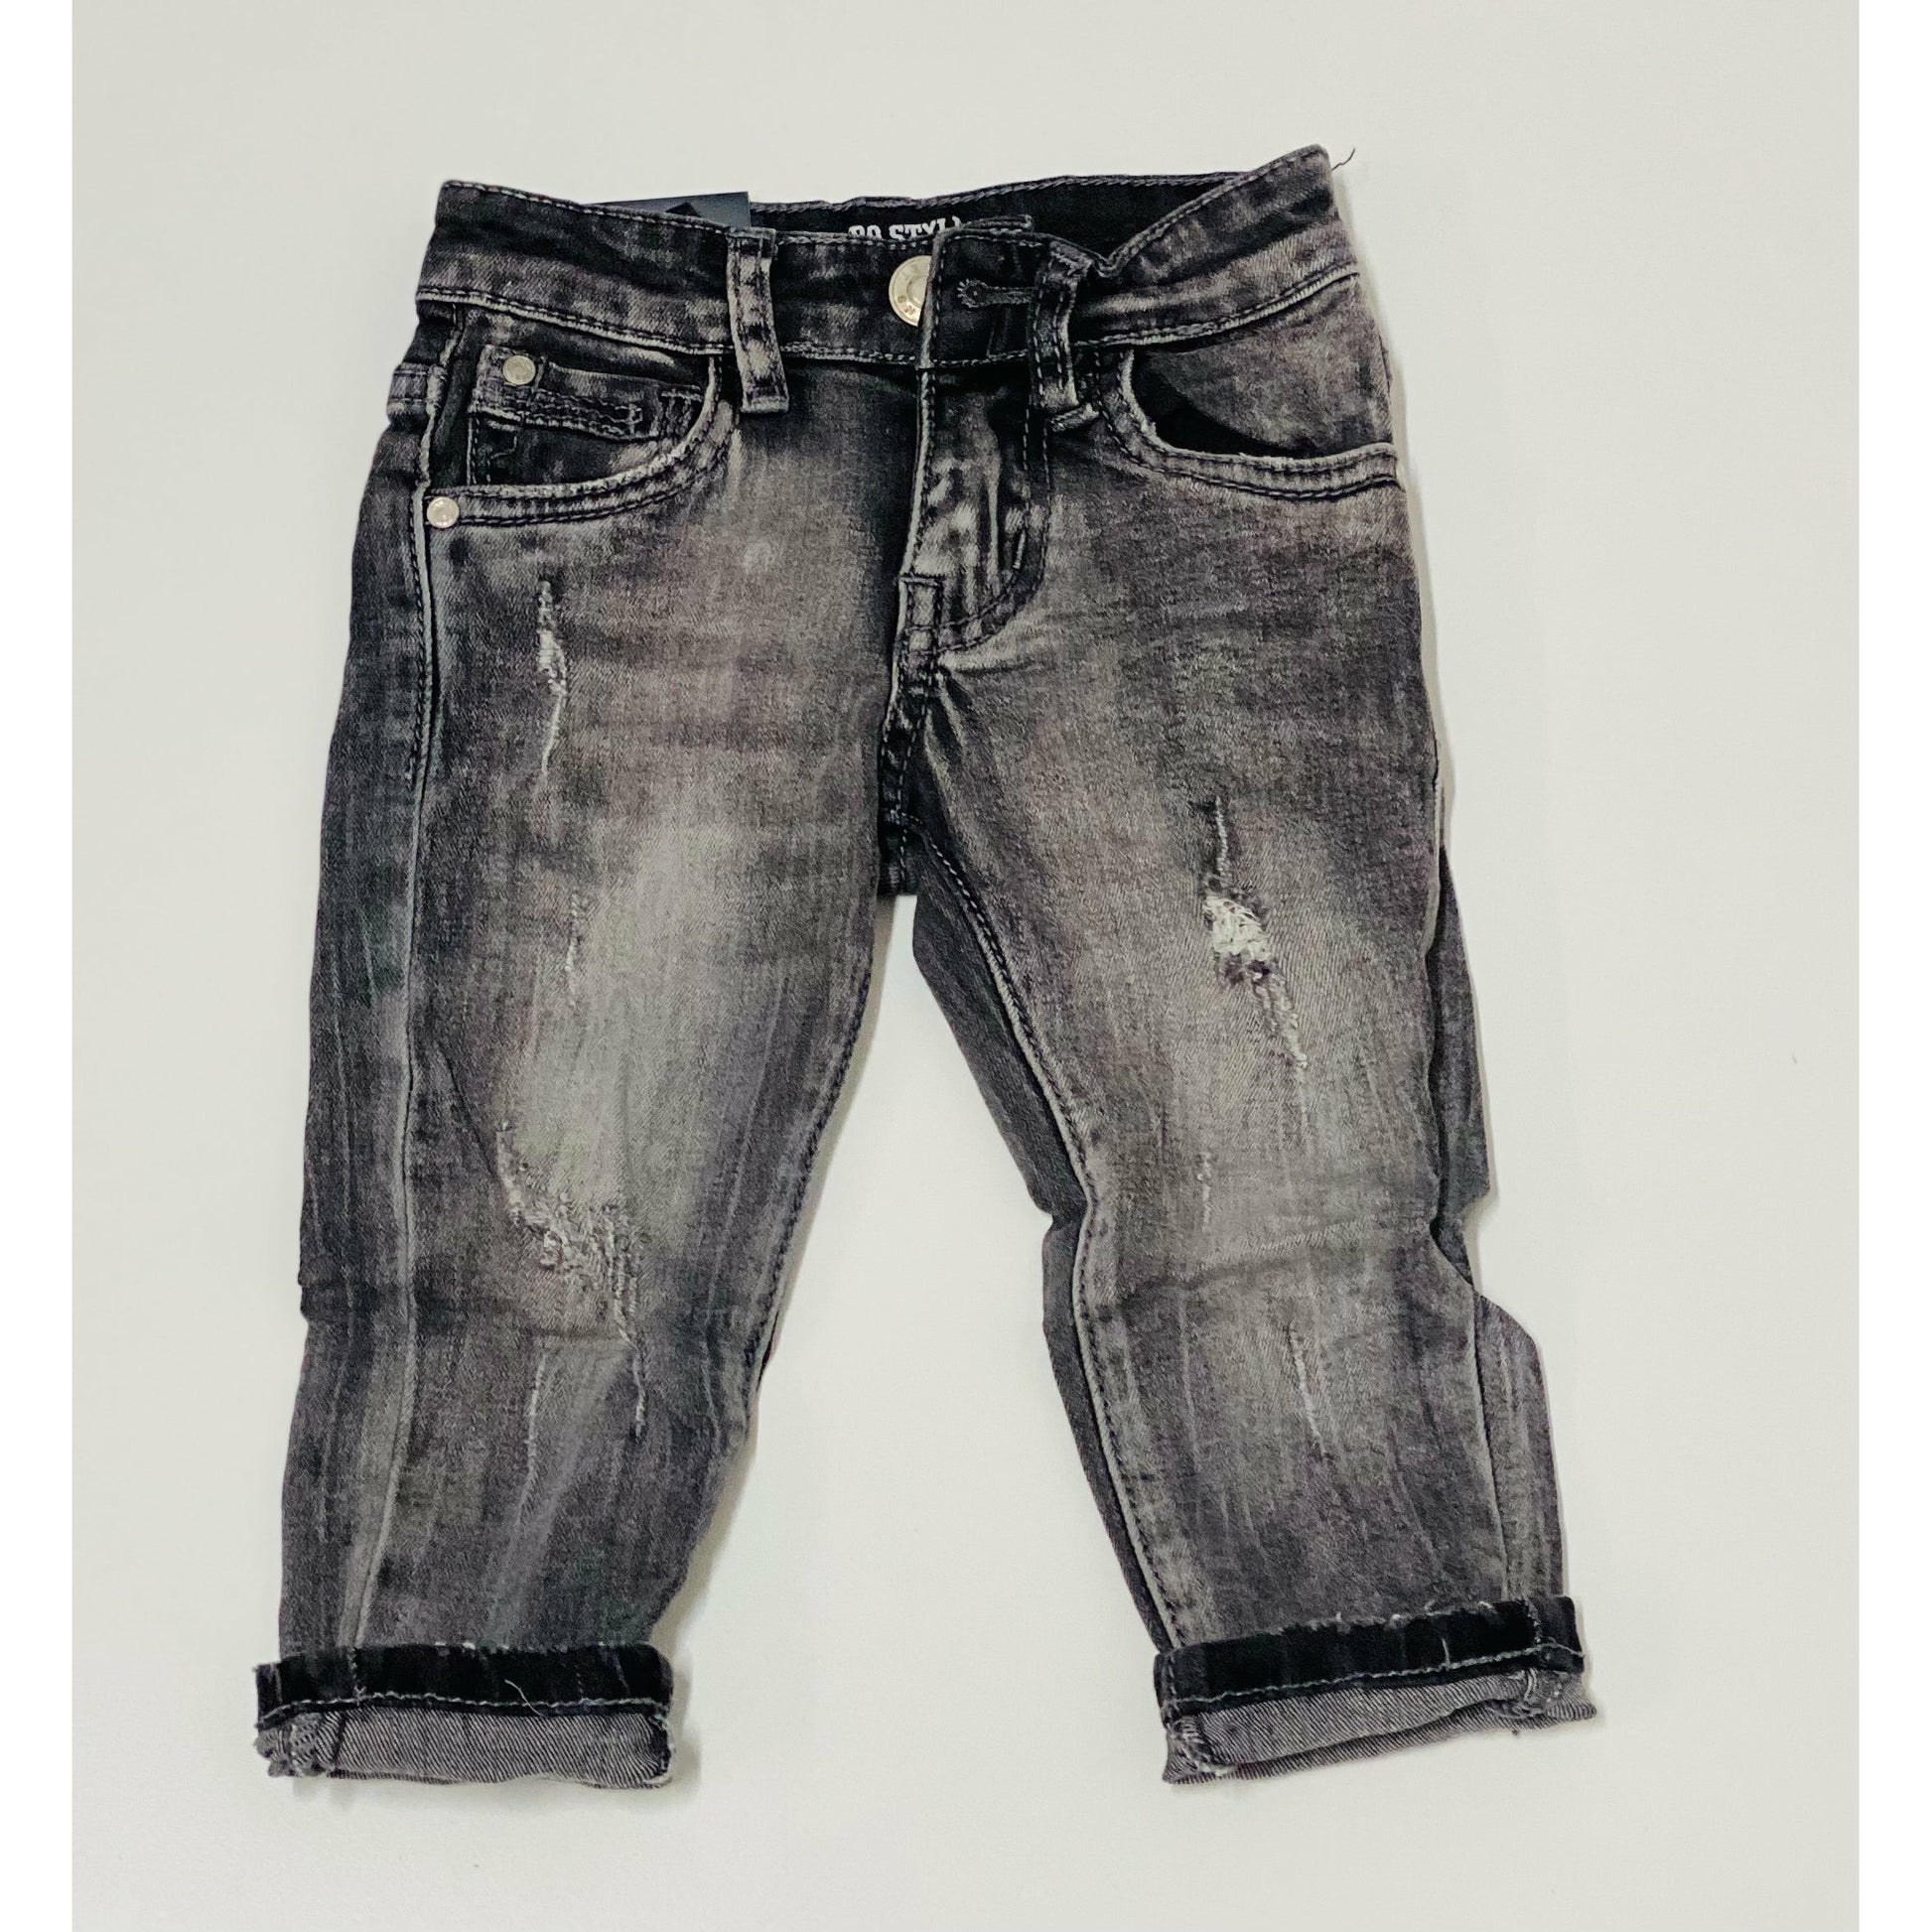 Jeans Neonato 9/36 Mesi - Mstore016